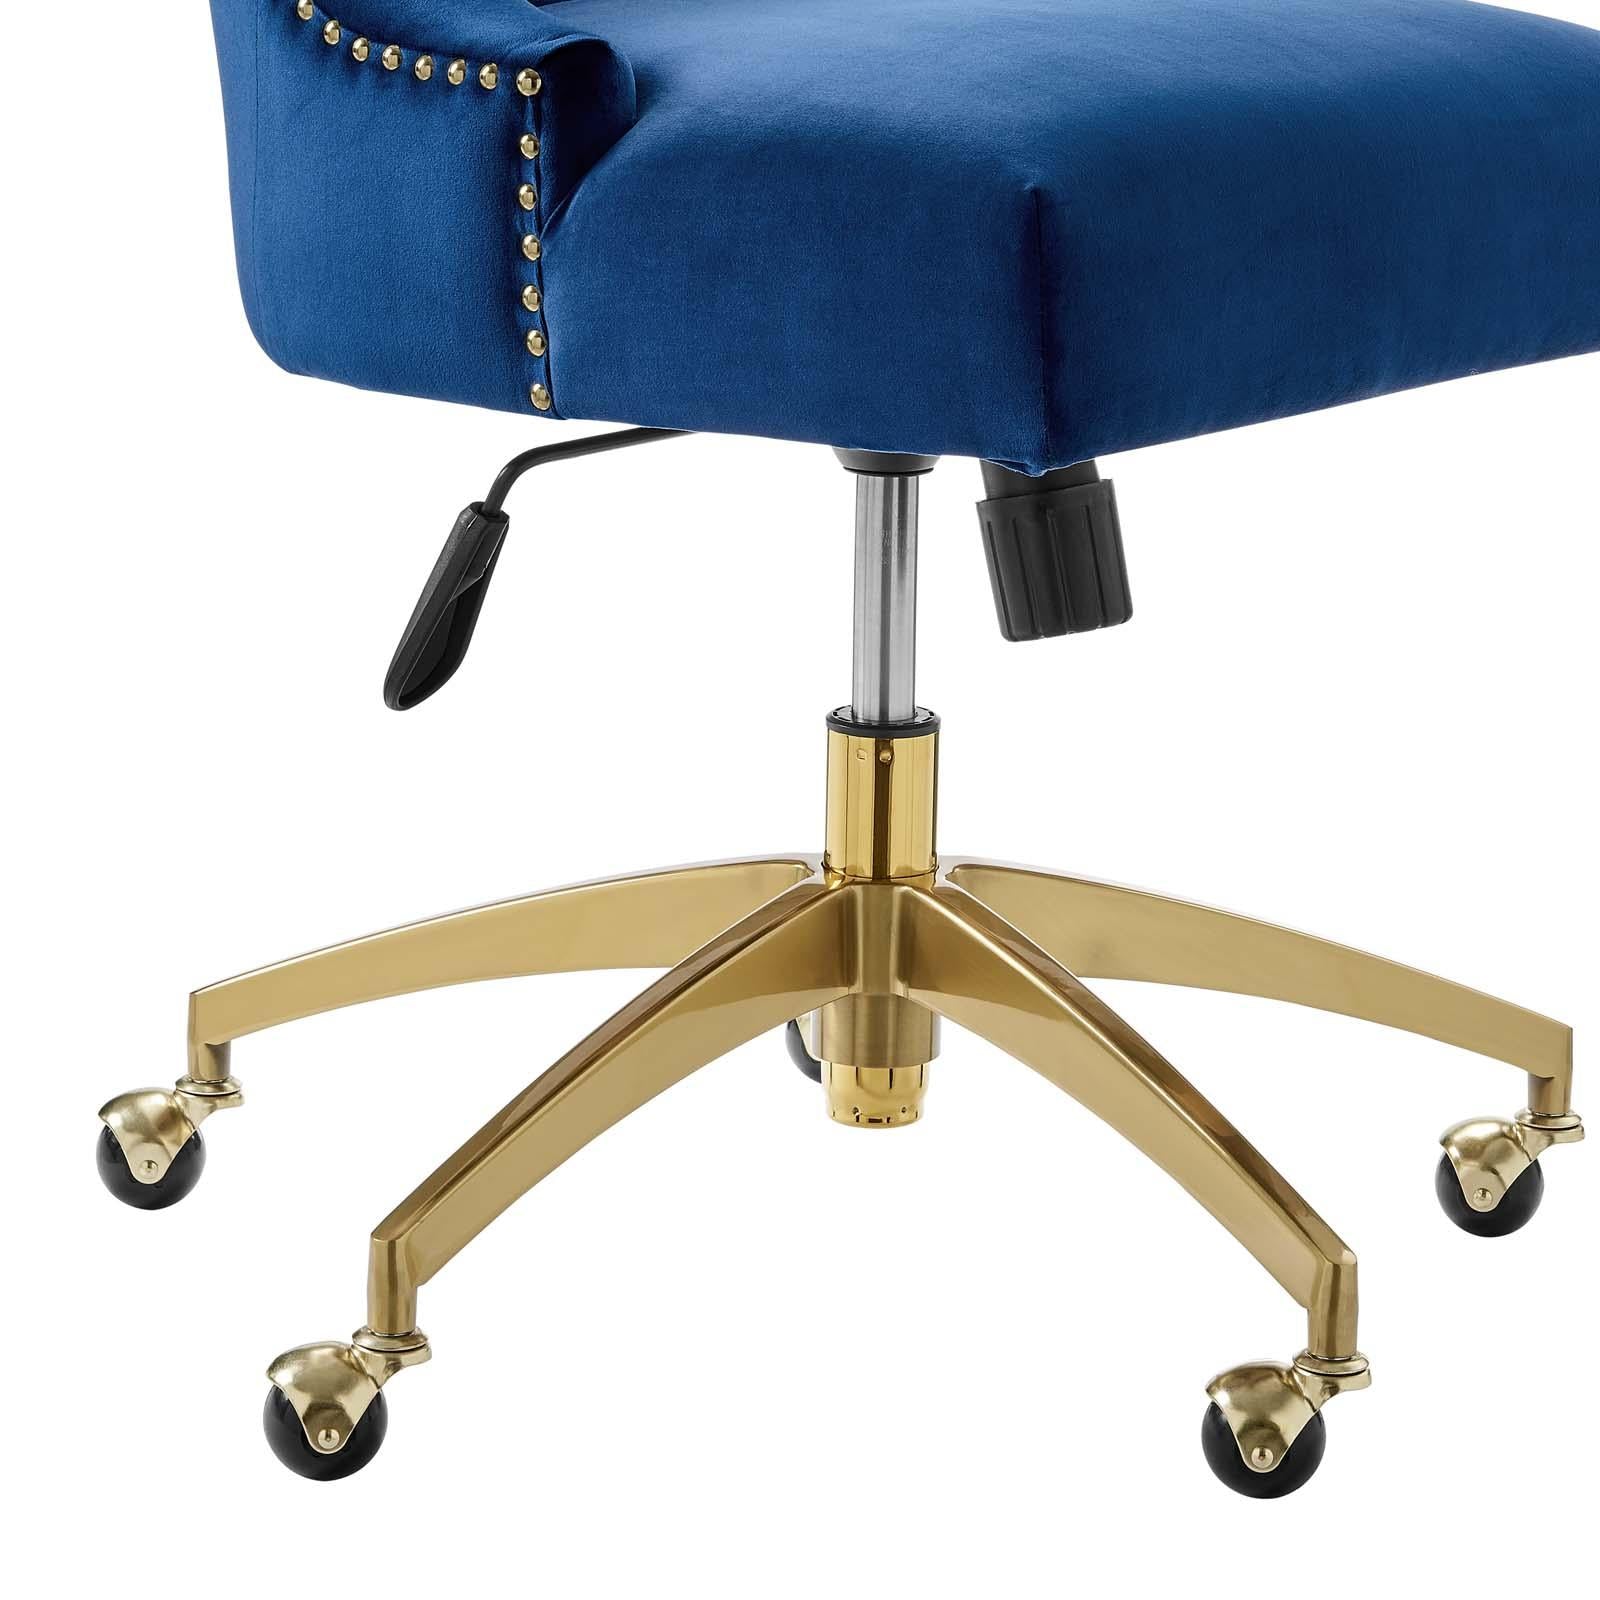 Modway Furniture Modern Empower Channel Tufted Performance Velvet Office Chair - EEI-4575